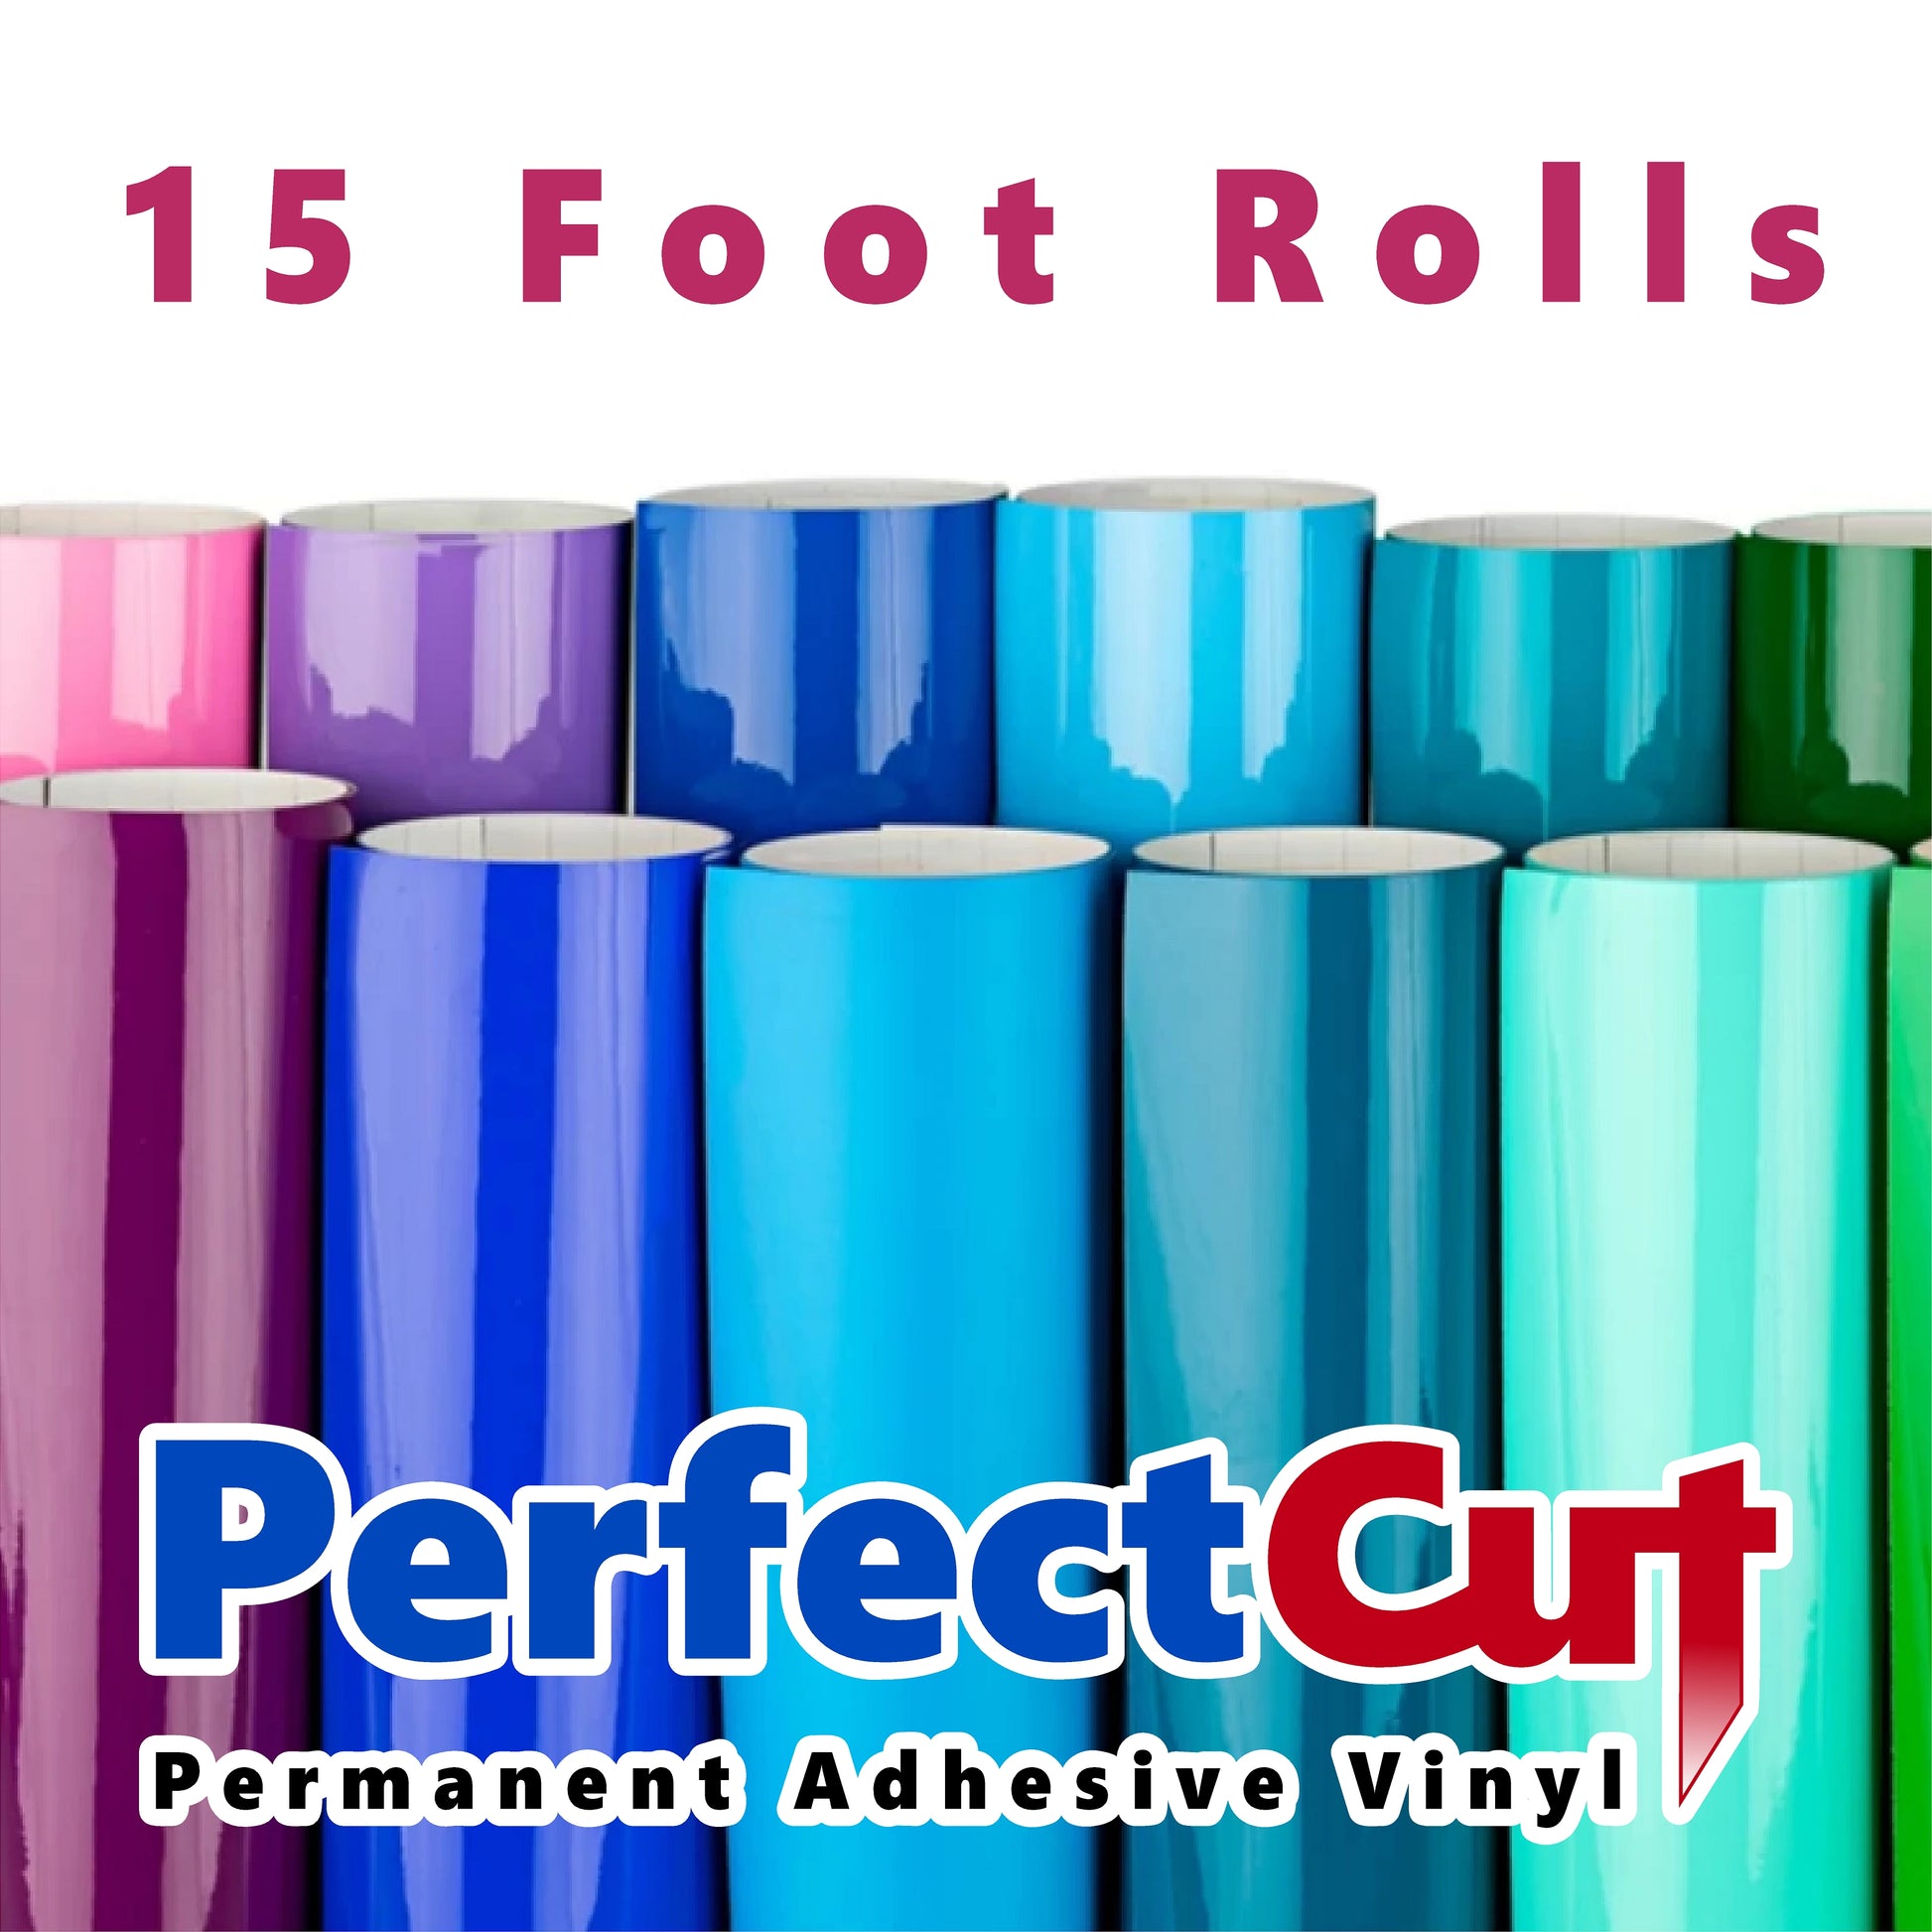 PerfectCut Permanent Adhesive Vinyl 22 Roll Bundle - 150 Feet